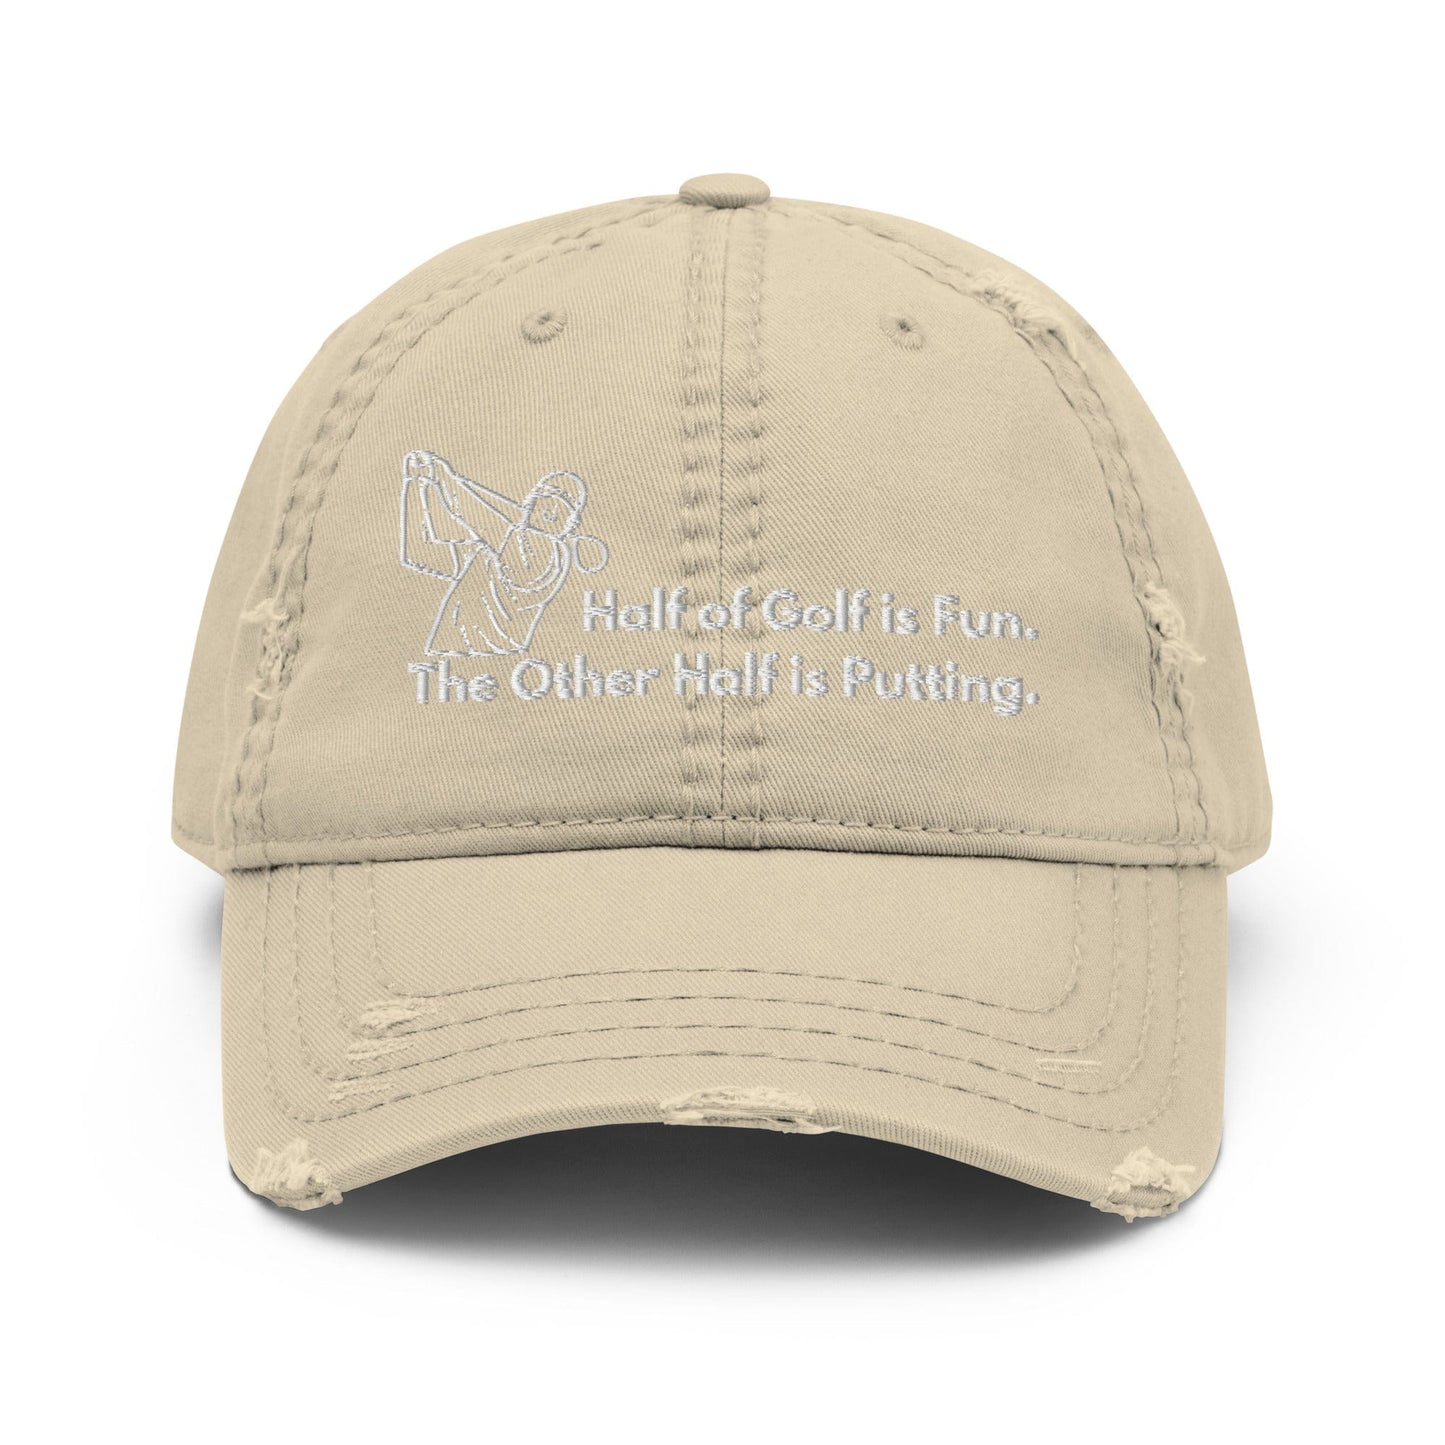 Funny Golfer Gifts  Distressed Cap Khaki Half of Golf is Fun Distressed Hat